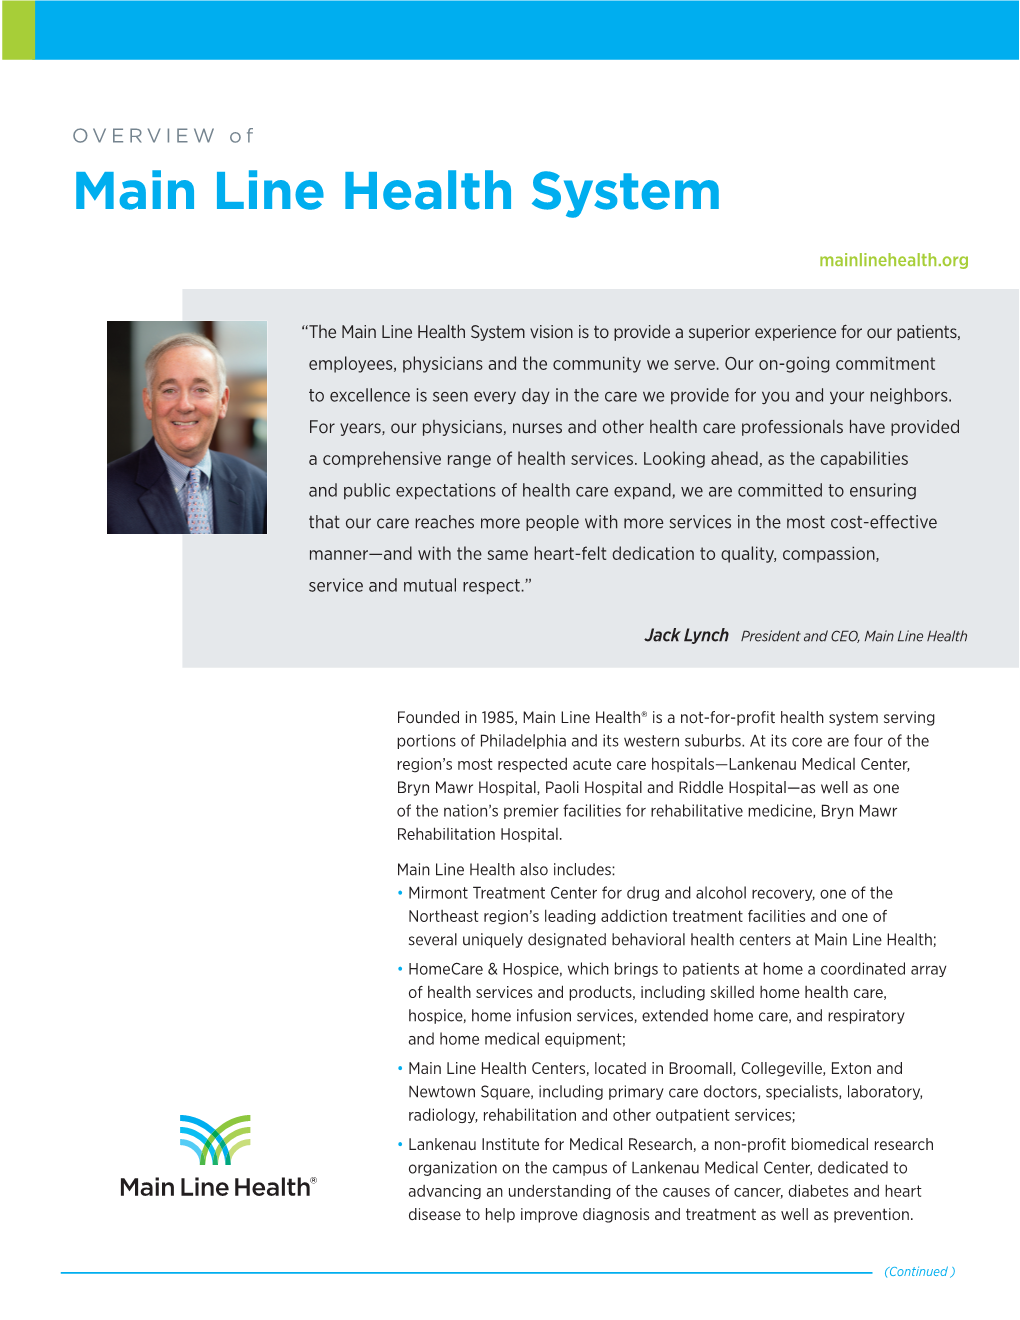 MAIN LINE HEALTH Administrative Fellowship Program Overview